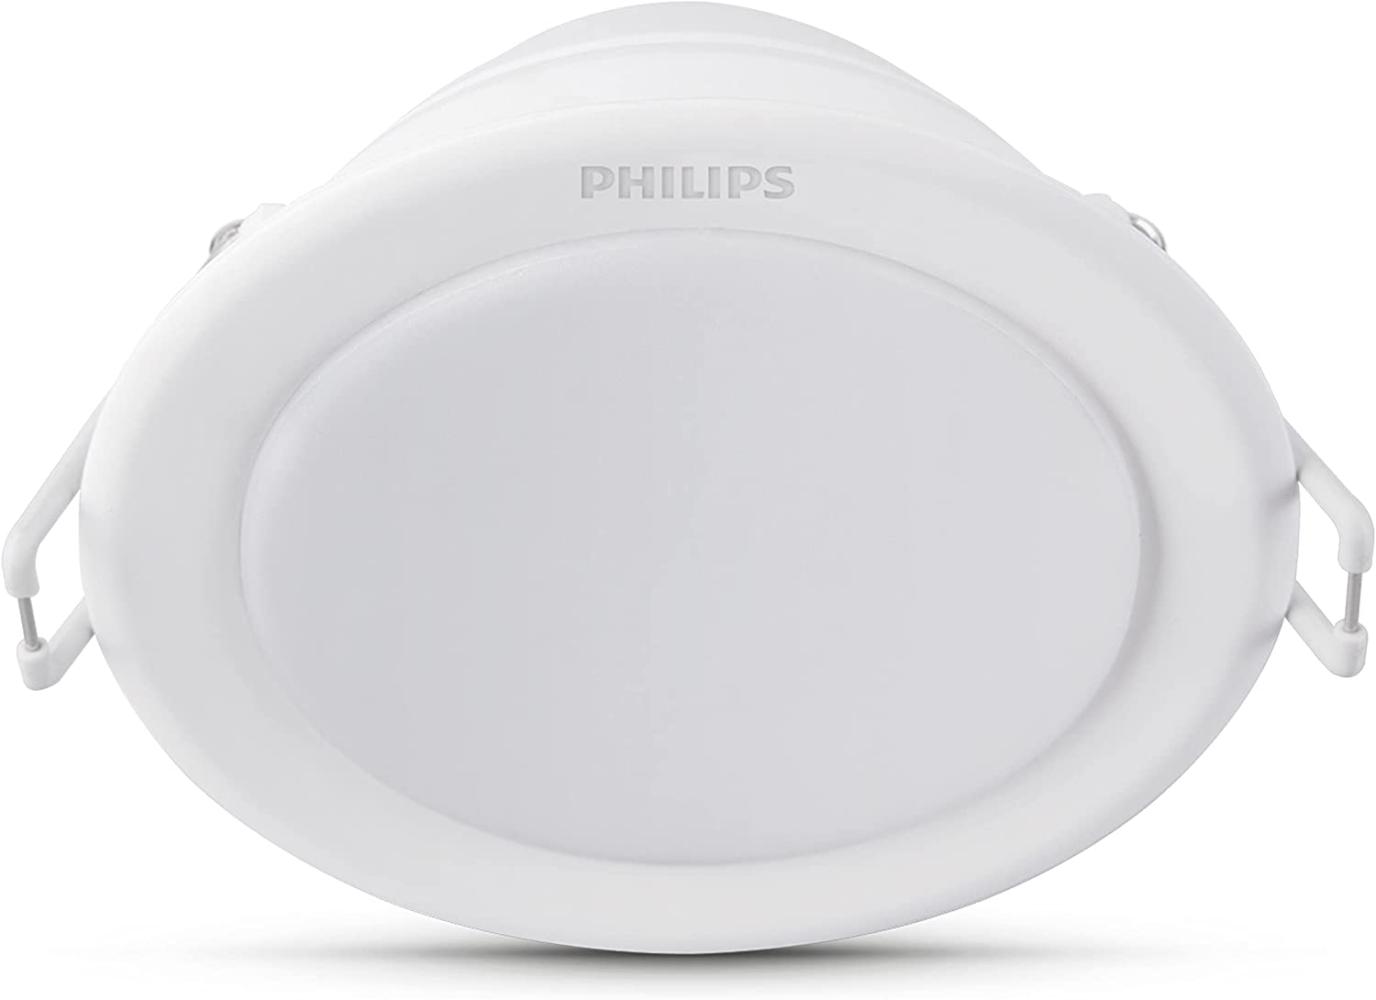 LED-Lampe Philips Downlight meson Weiß Kunststoff 550 lm (Ø 9,5 x 7,5 cm) Bild 1